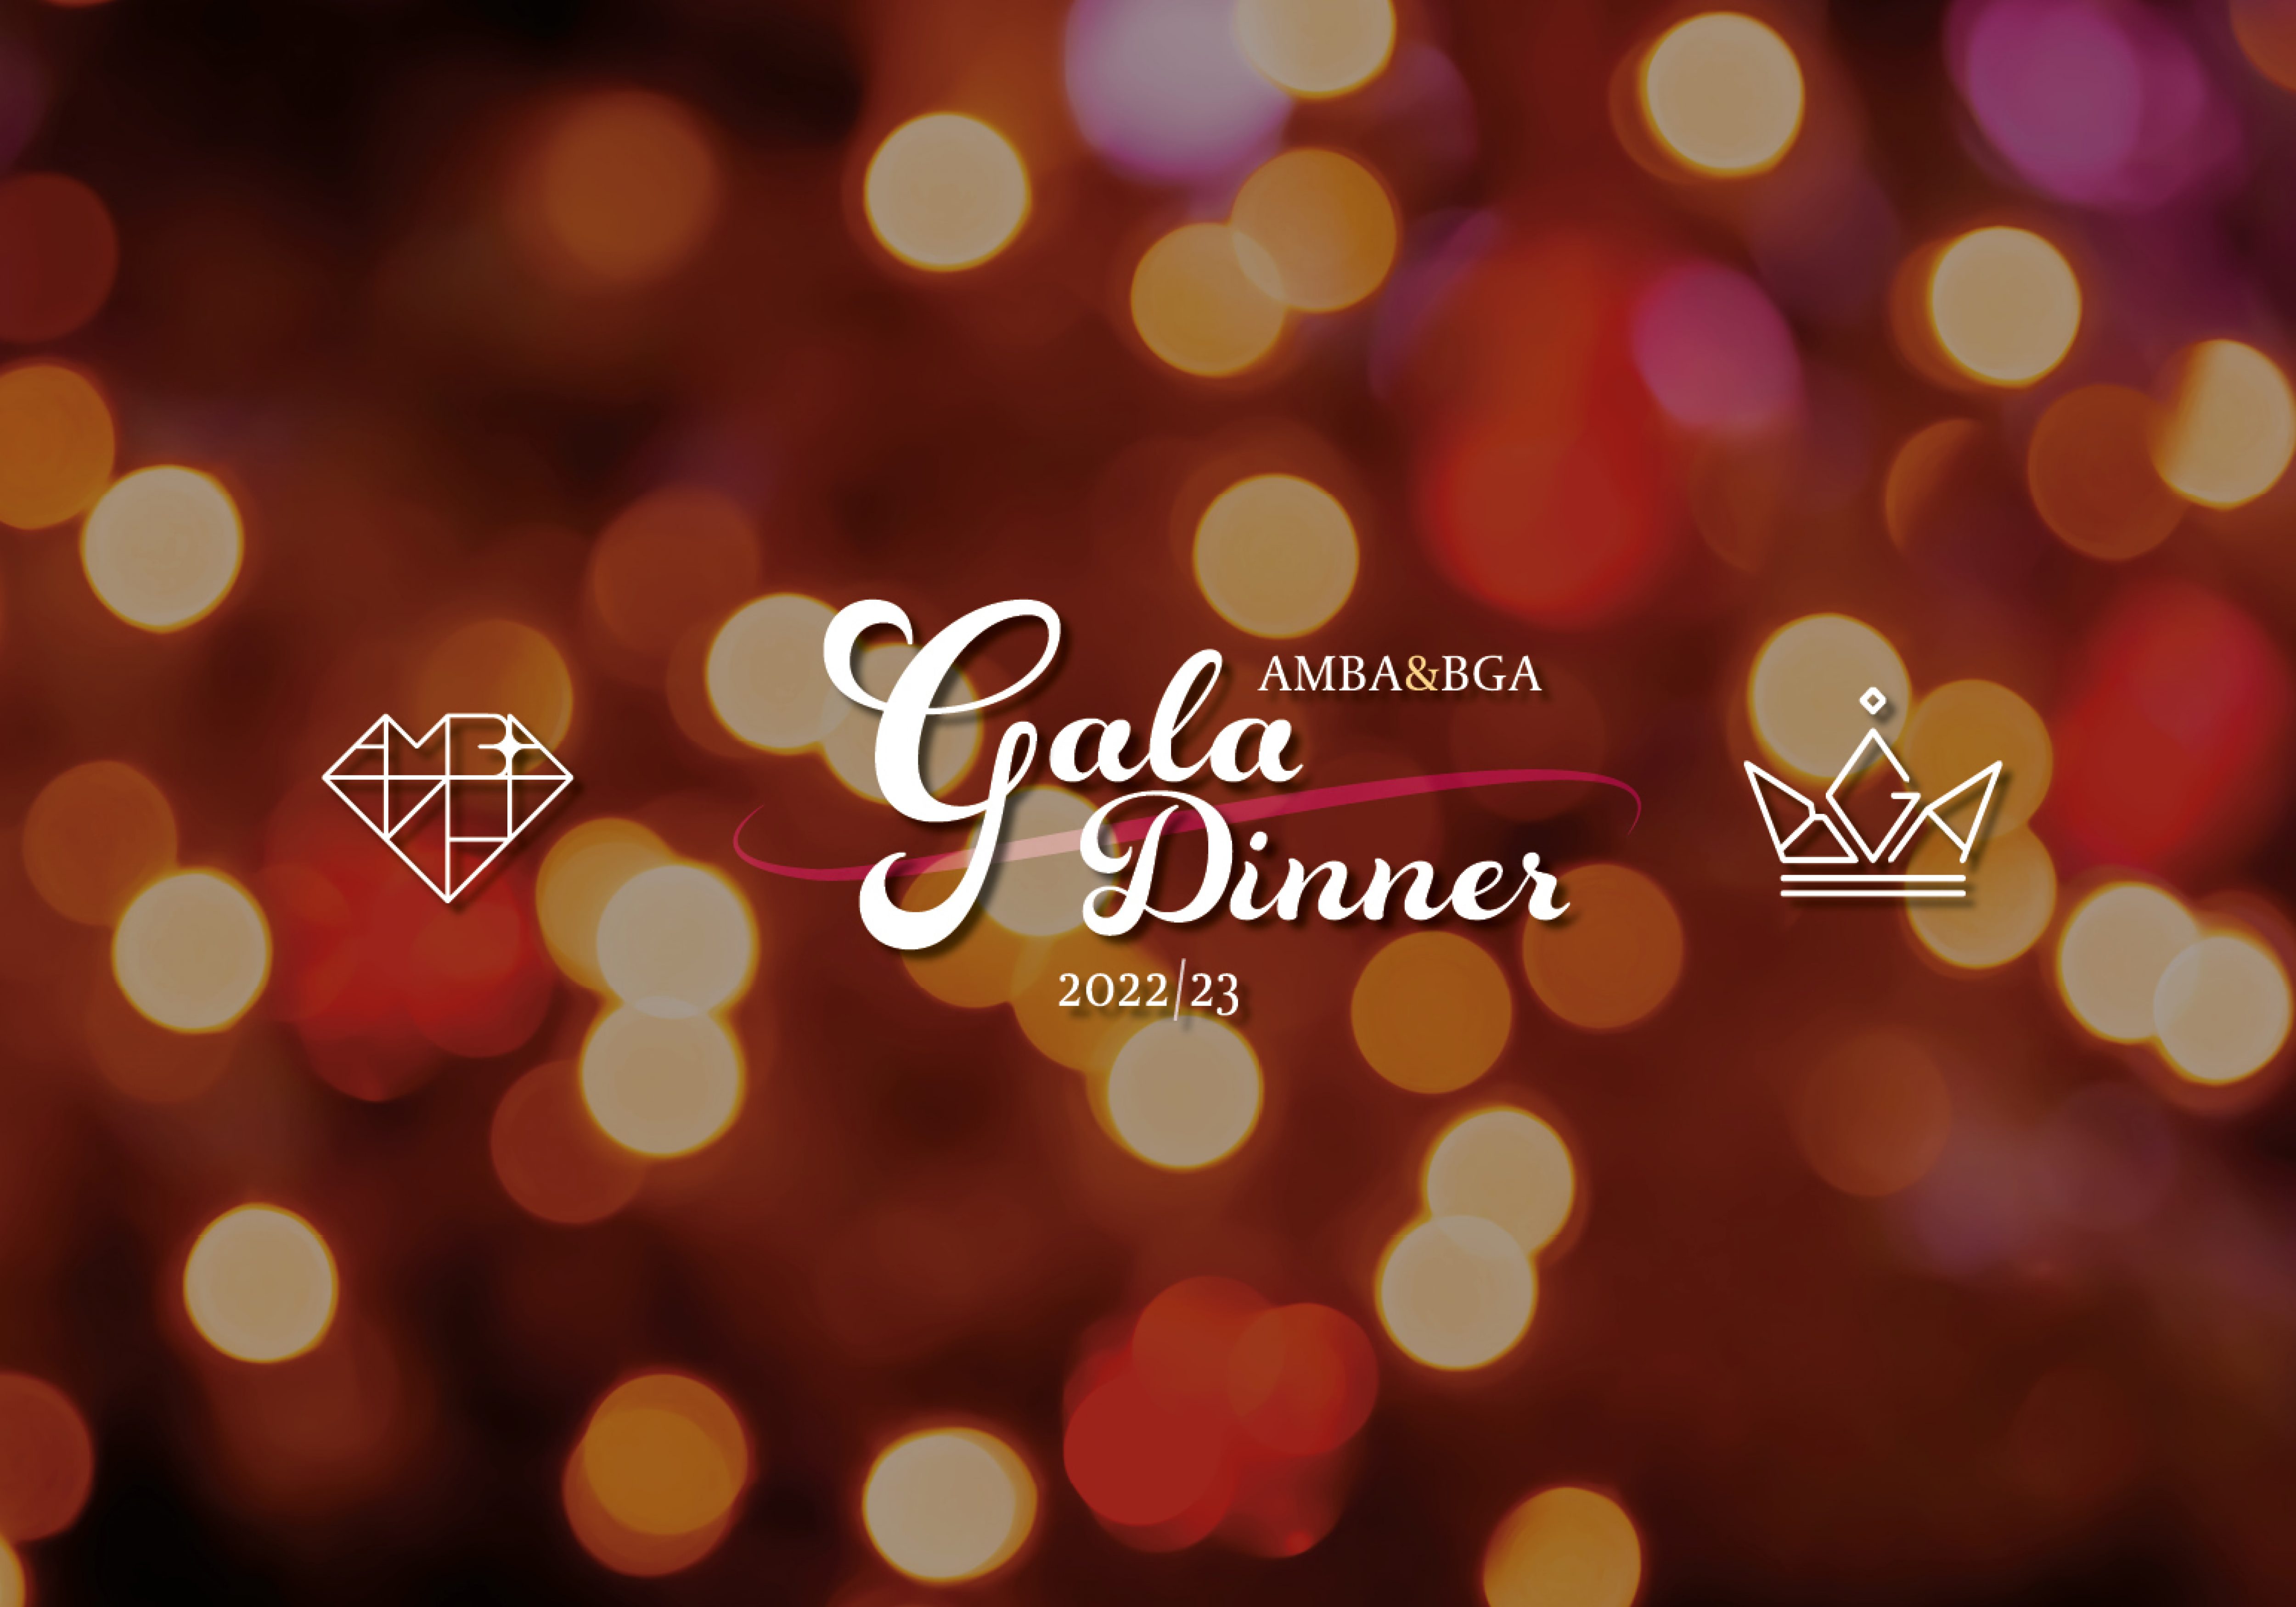 Excellence Awards Gala Dinner 22-23